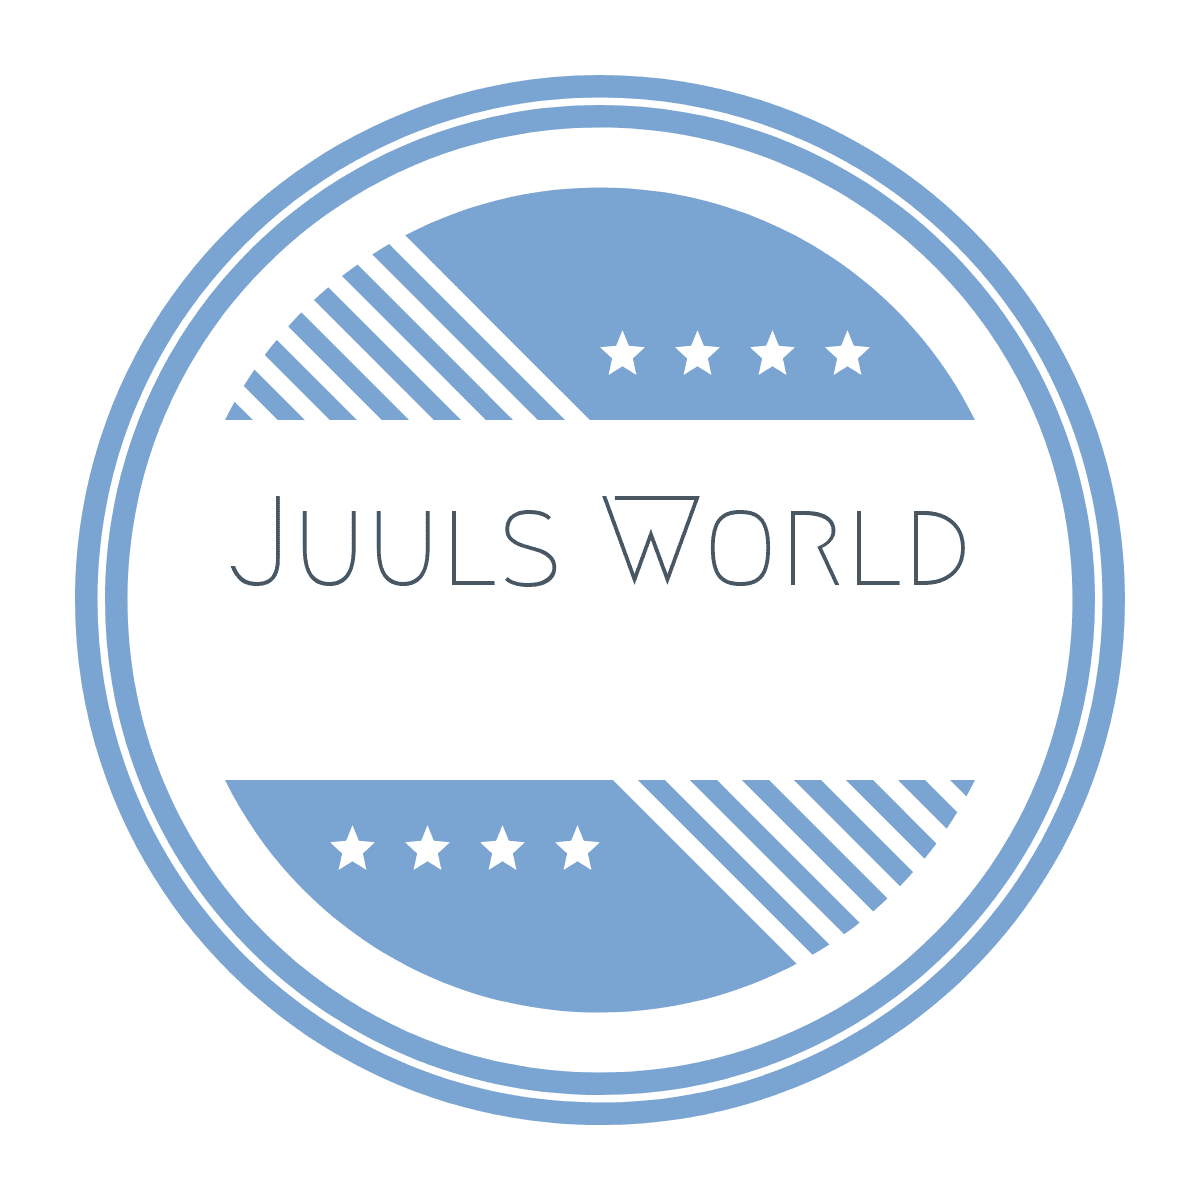 Juuls World